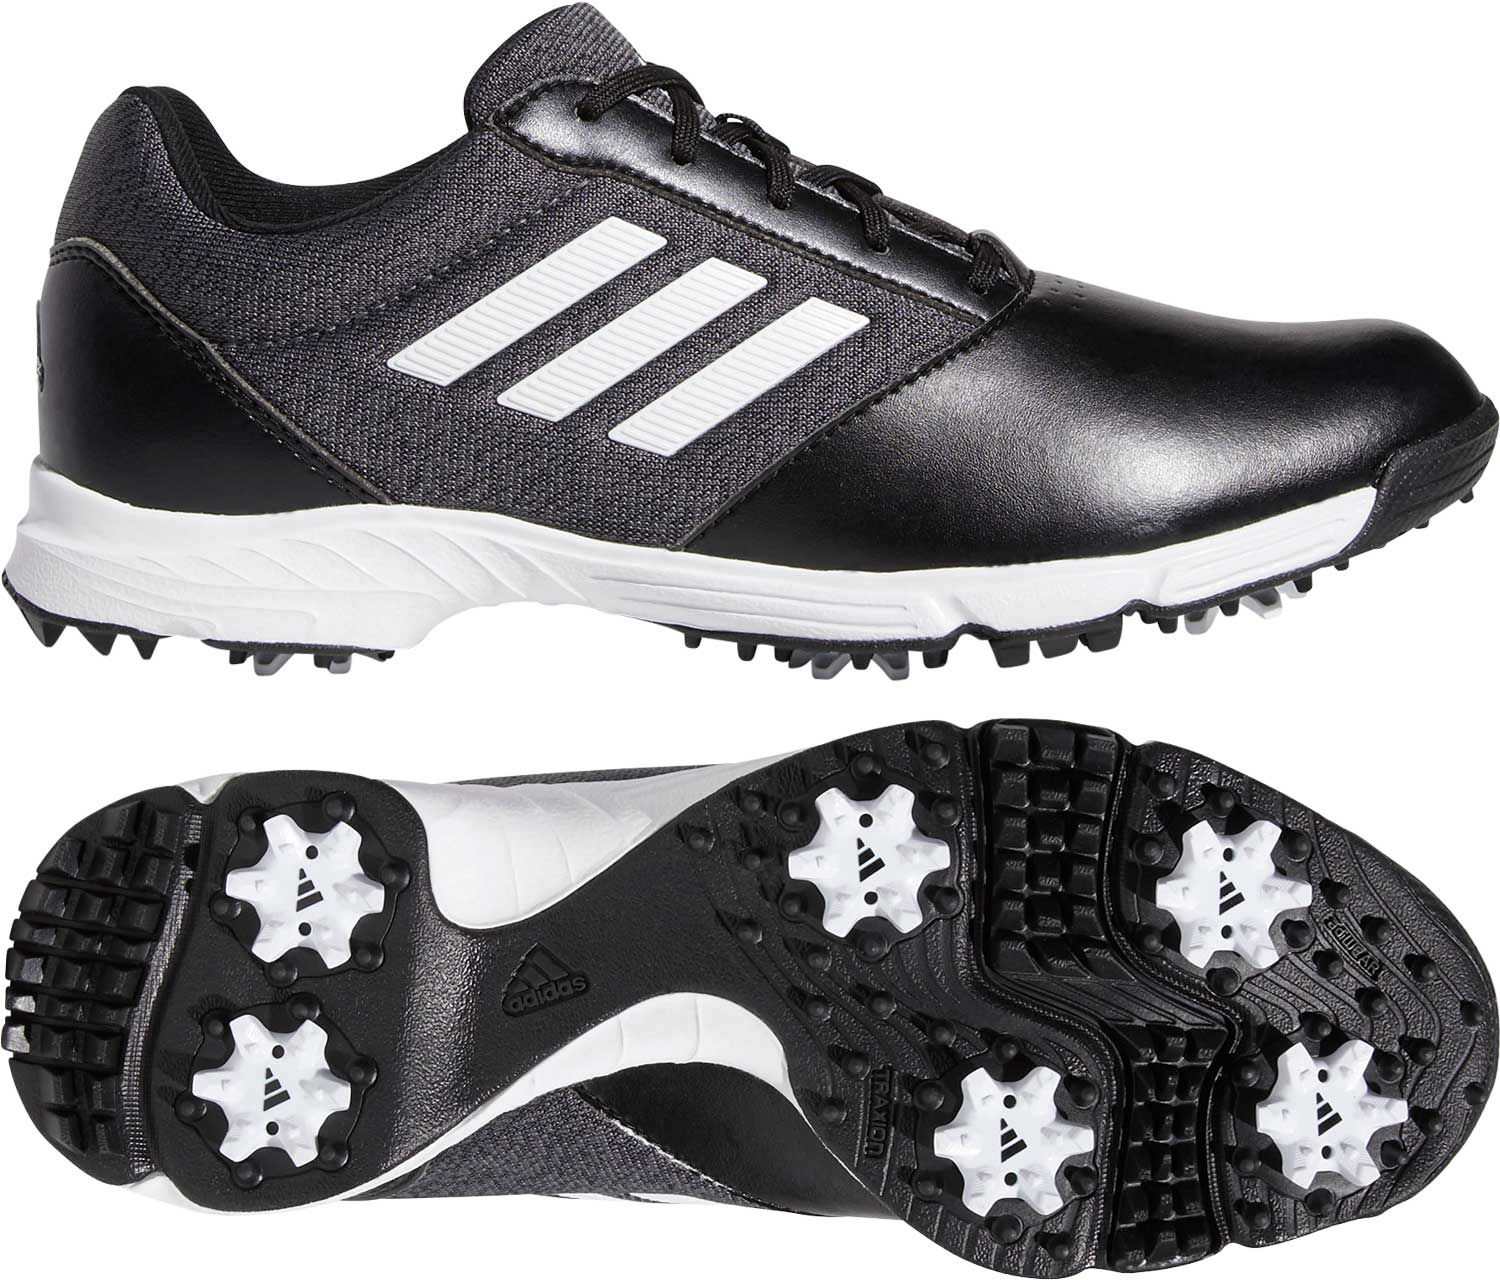 adidas boost ladies golf shoes